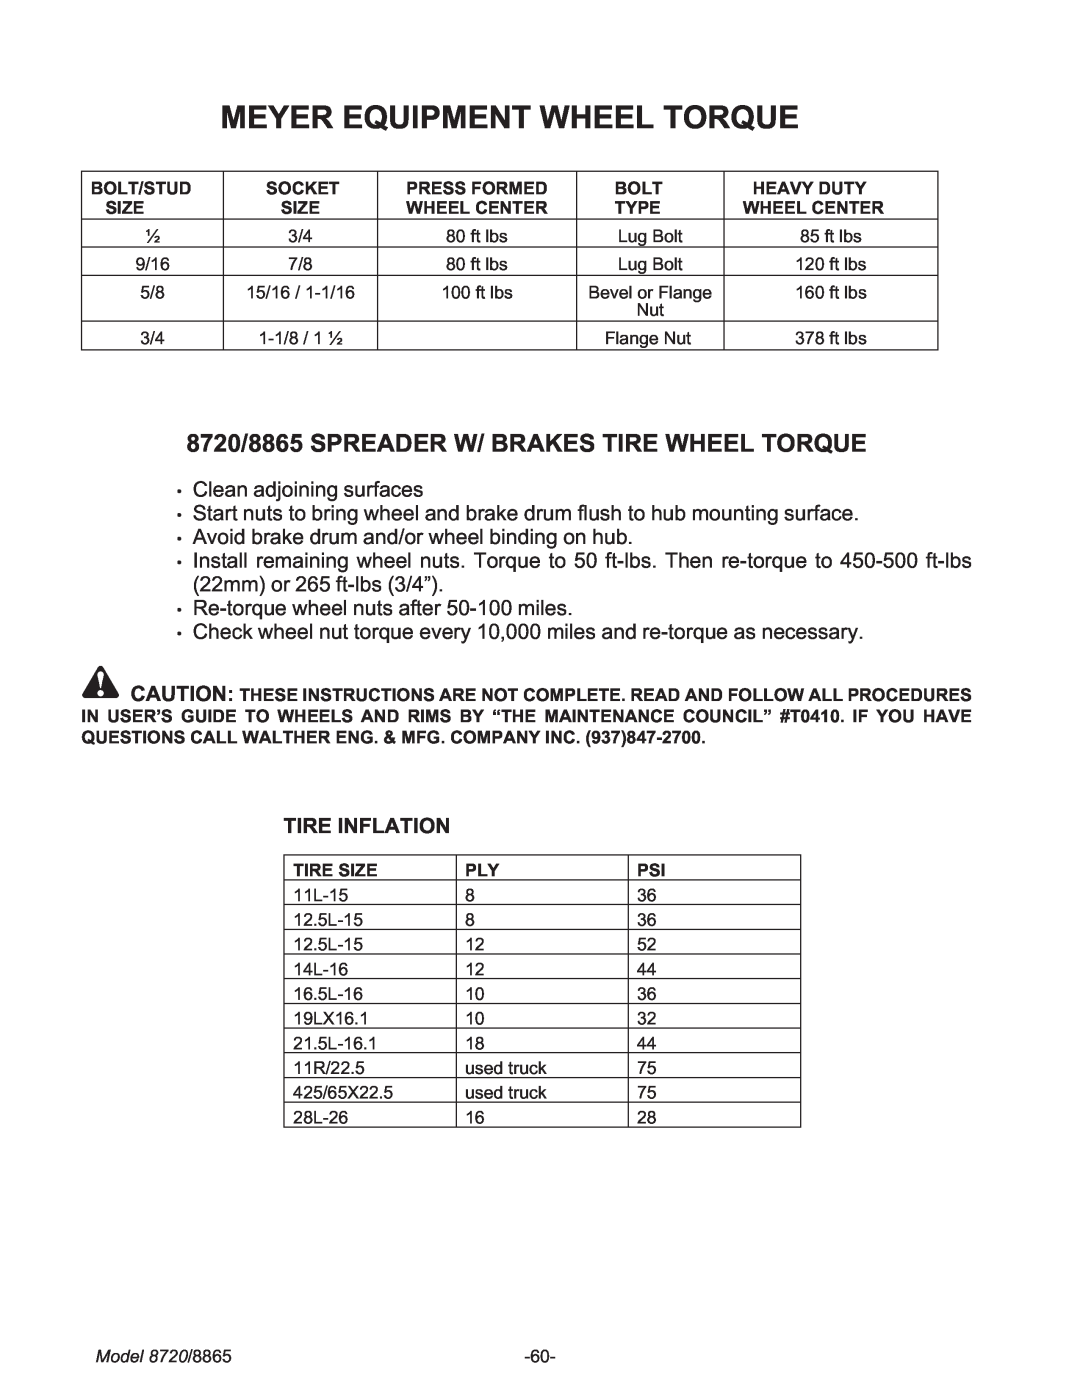 Meyer manual Meyer Equipment Wheel Torque, 8720/8865 SPREADER W/ BRAKES TIRE WHEEL TORQUE, Tire Inflation 